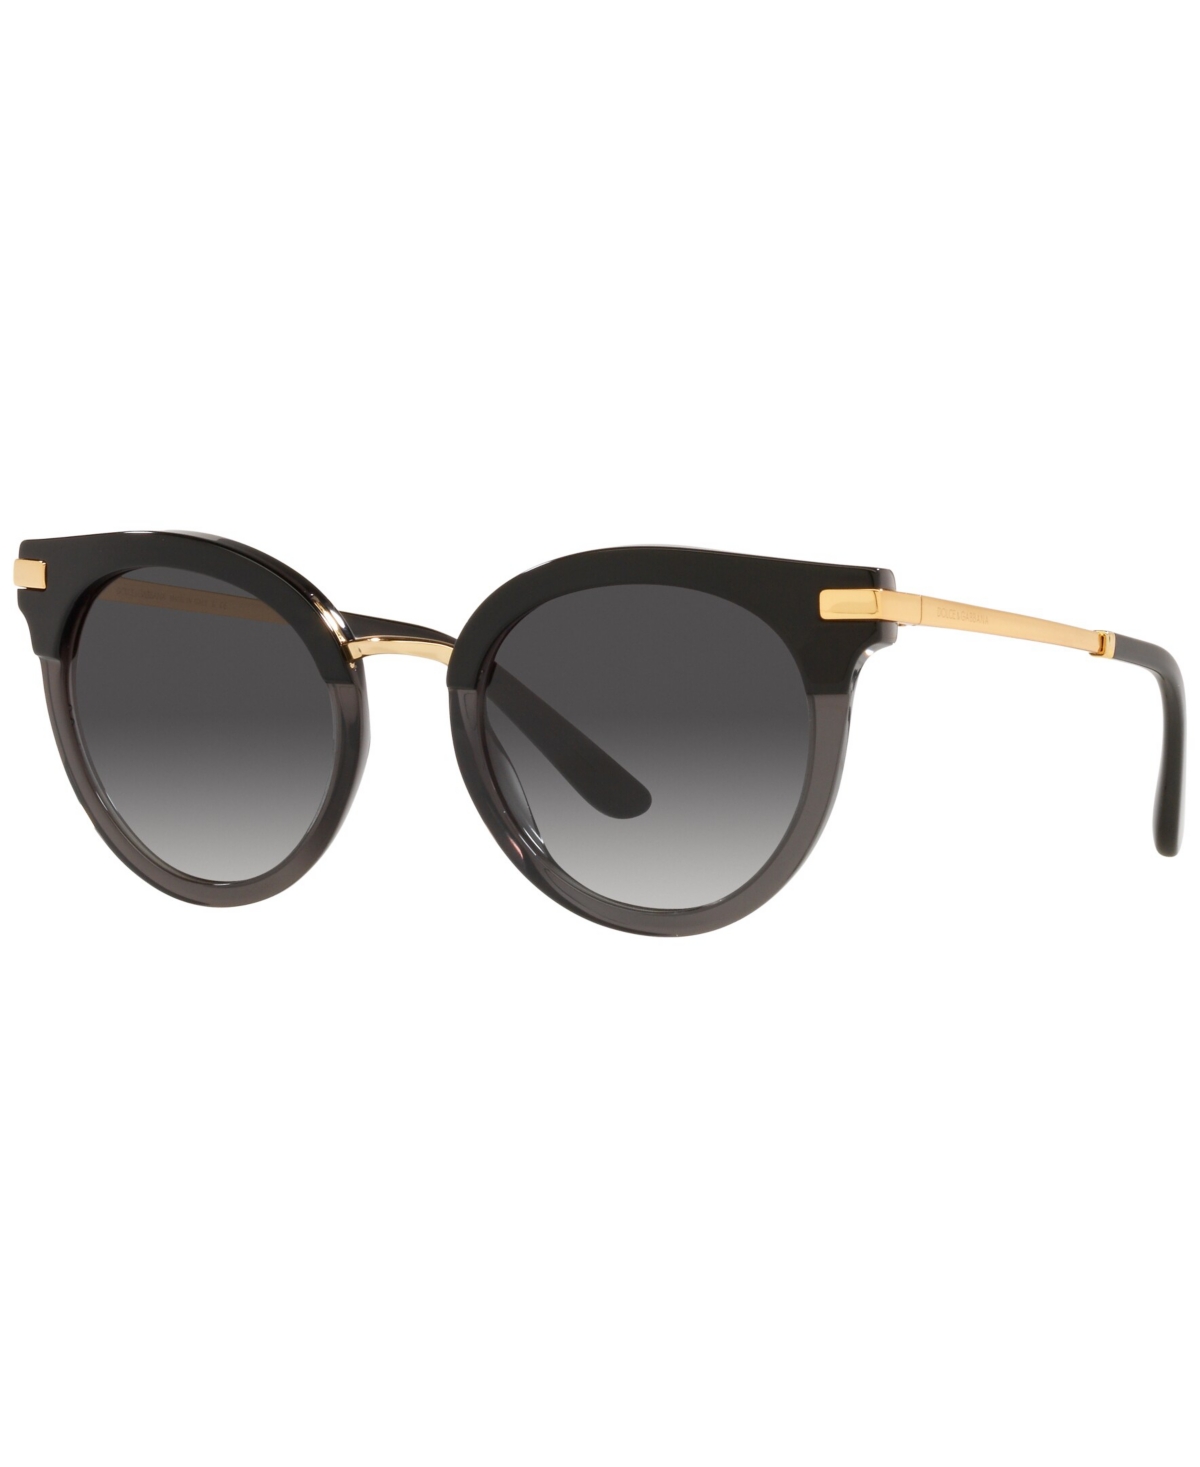 Dolce&Gabbana Women's Sunglasses, DG4394 - Black, Transparent Black